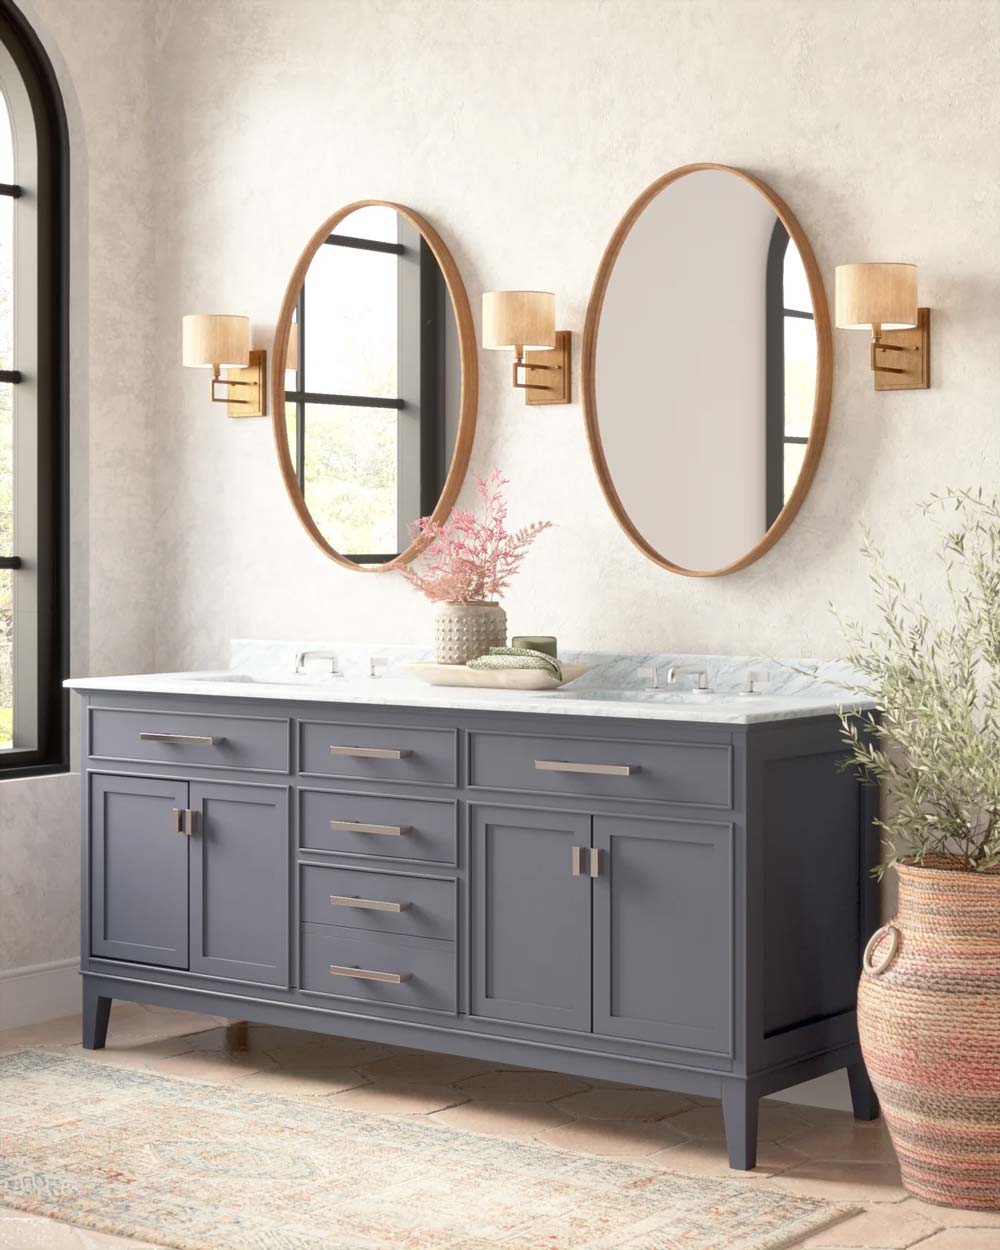 Oval Gold Vanity Mirror - can be installed in bathroom, living room, hallway, entryway 